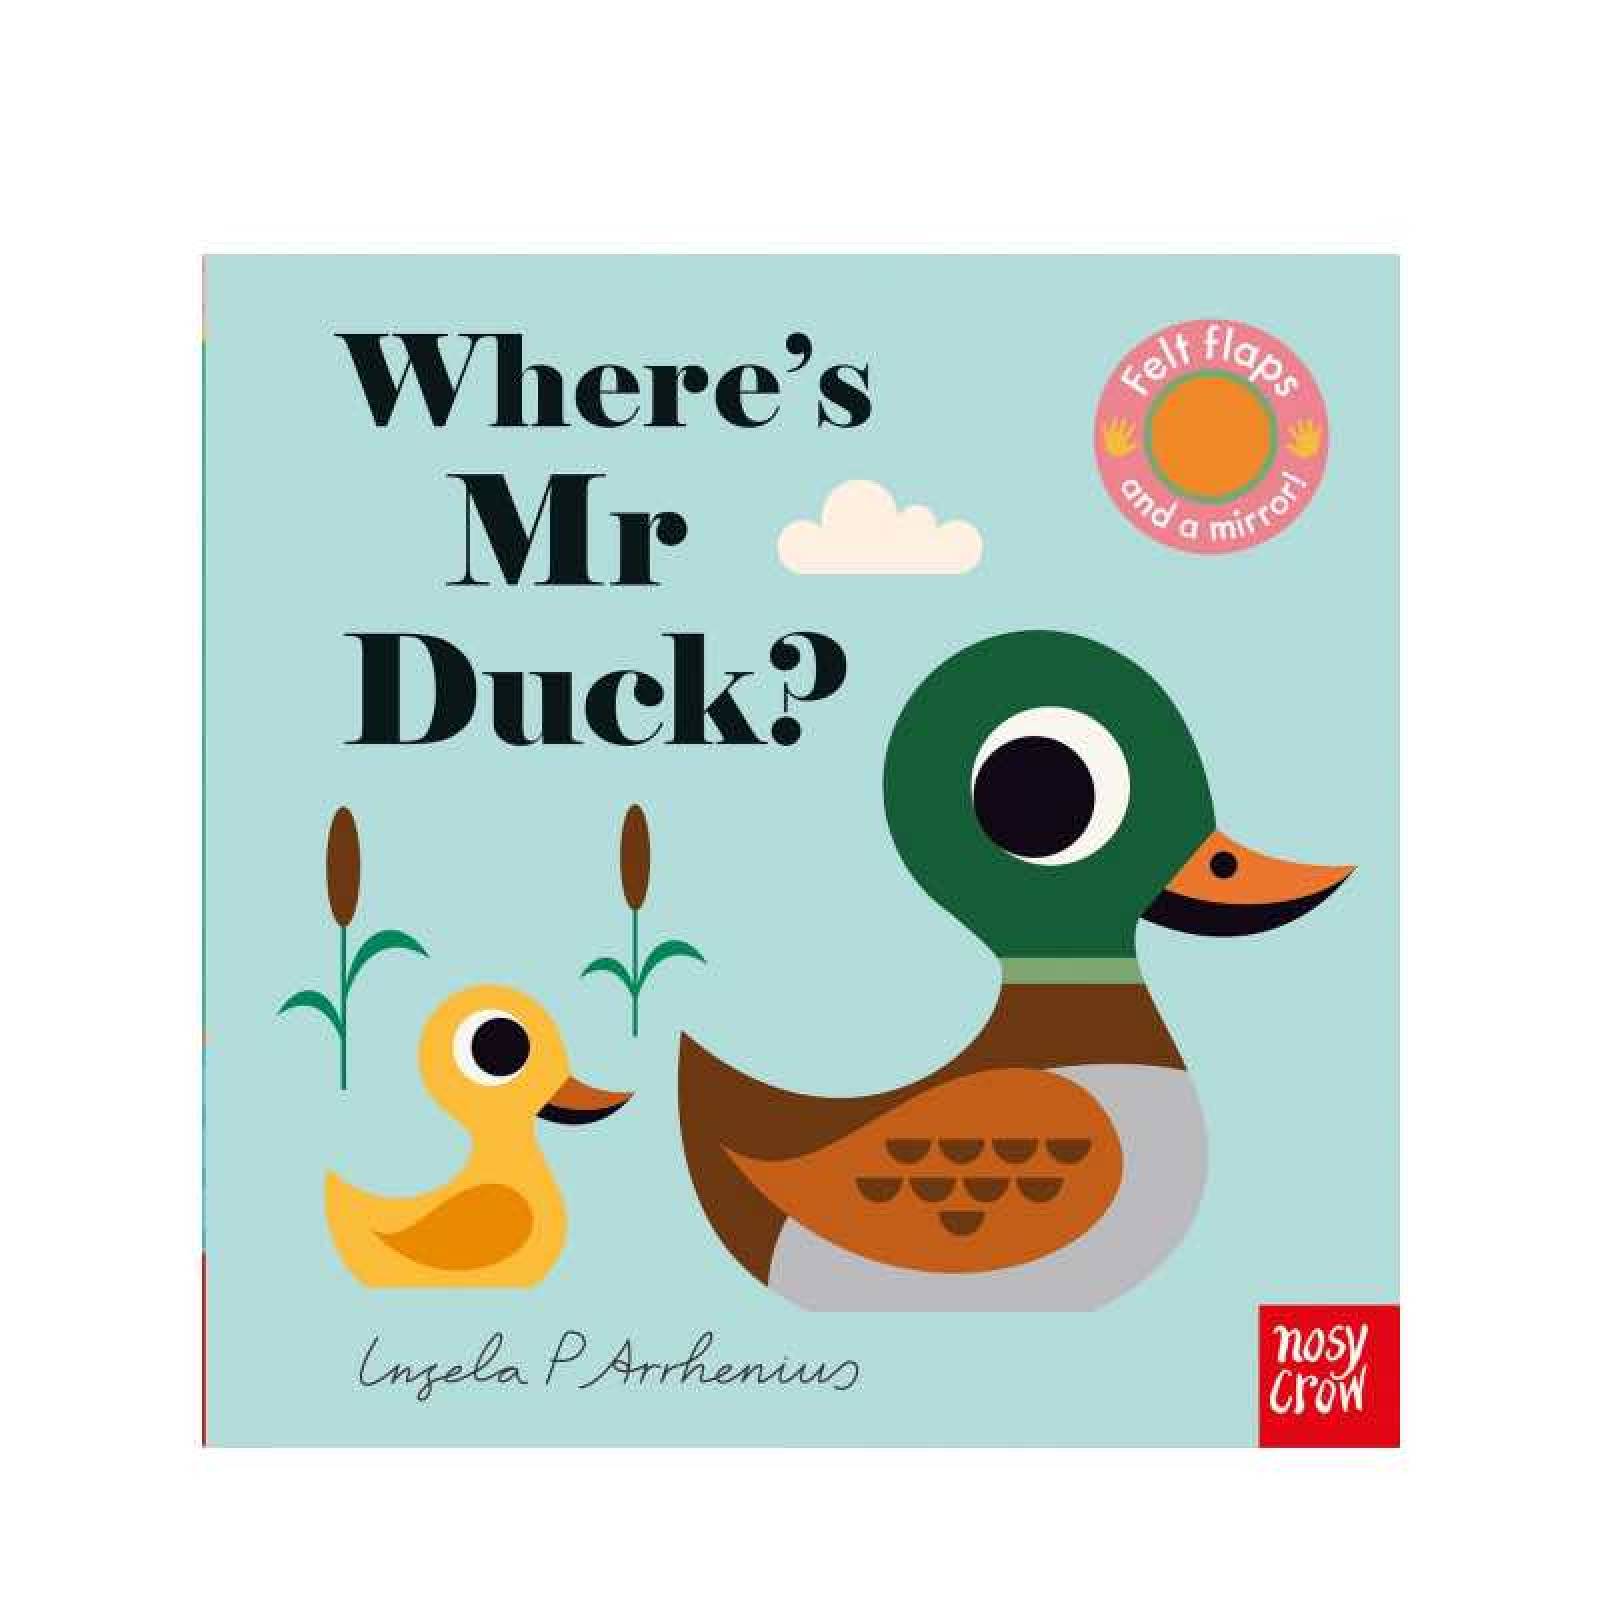 Where's Mr Duck? - Felt Flaps Board book